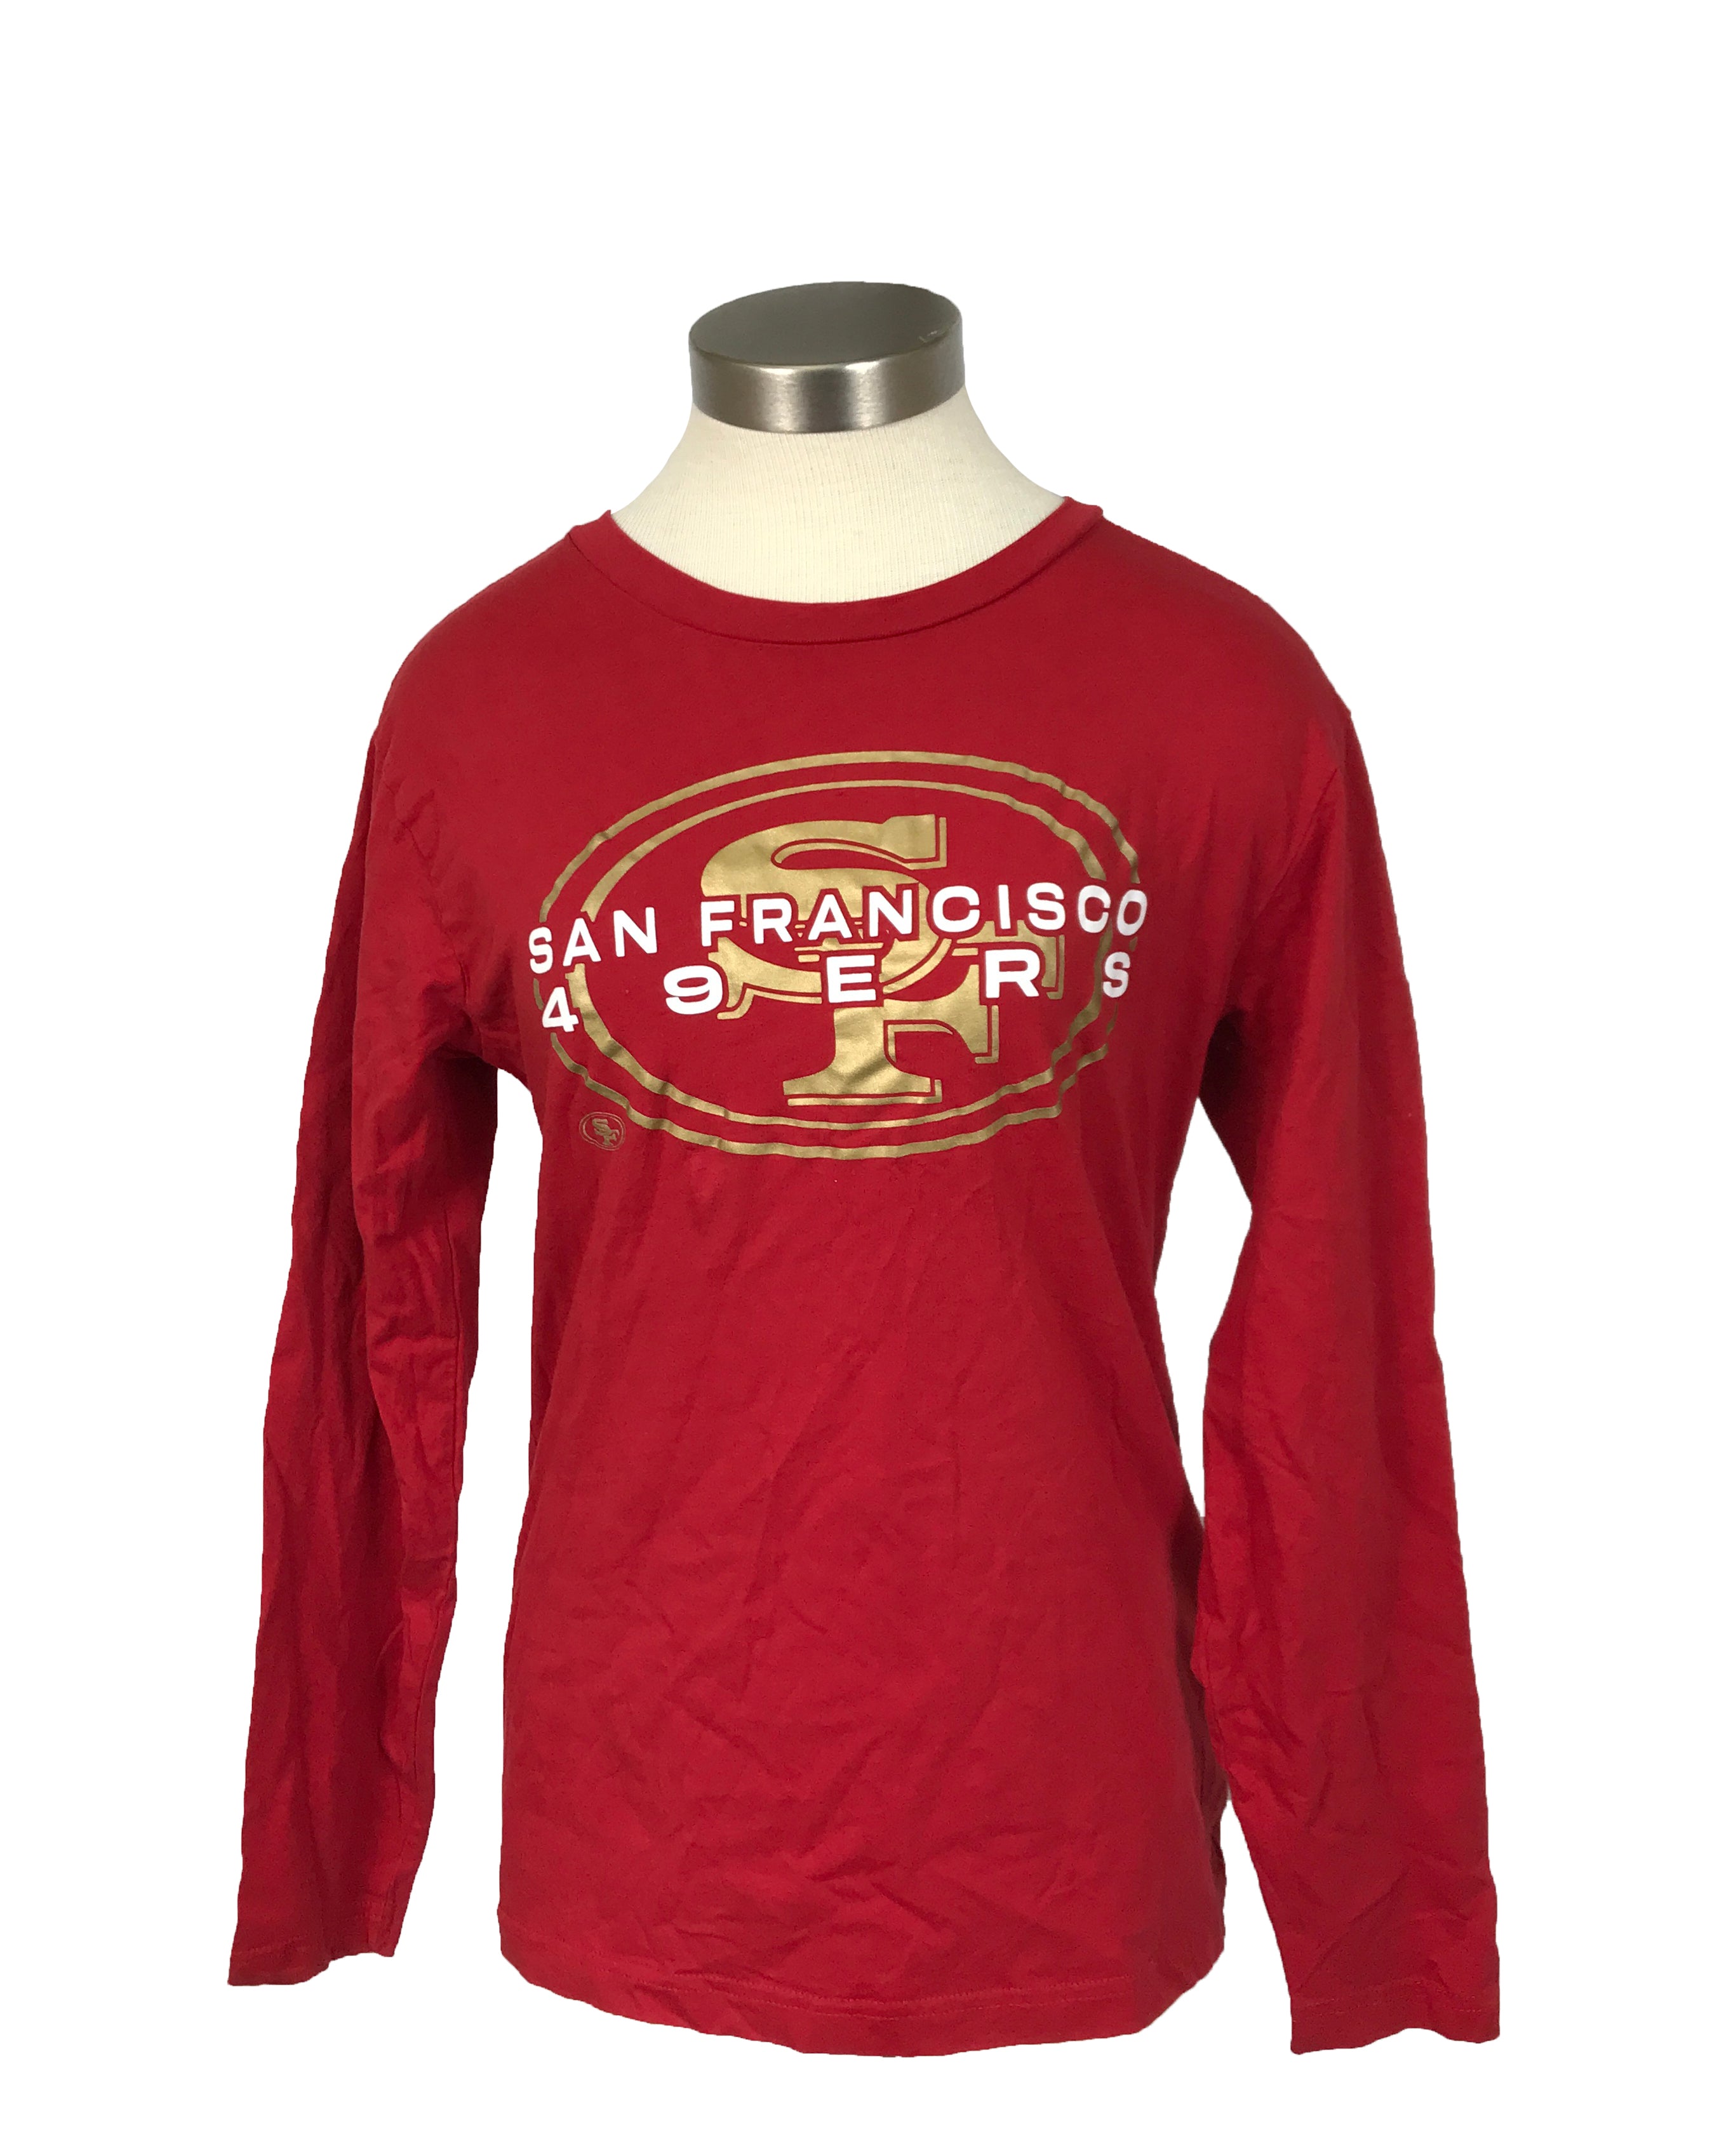 San Francisco 49ers Red Long Sleeve Shirt Men's Size M